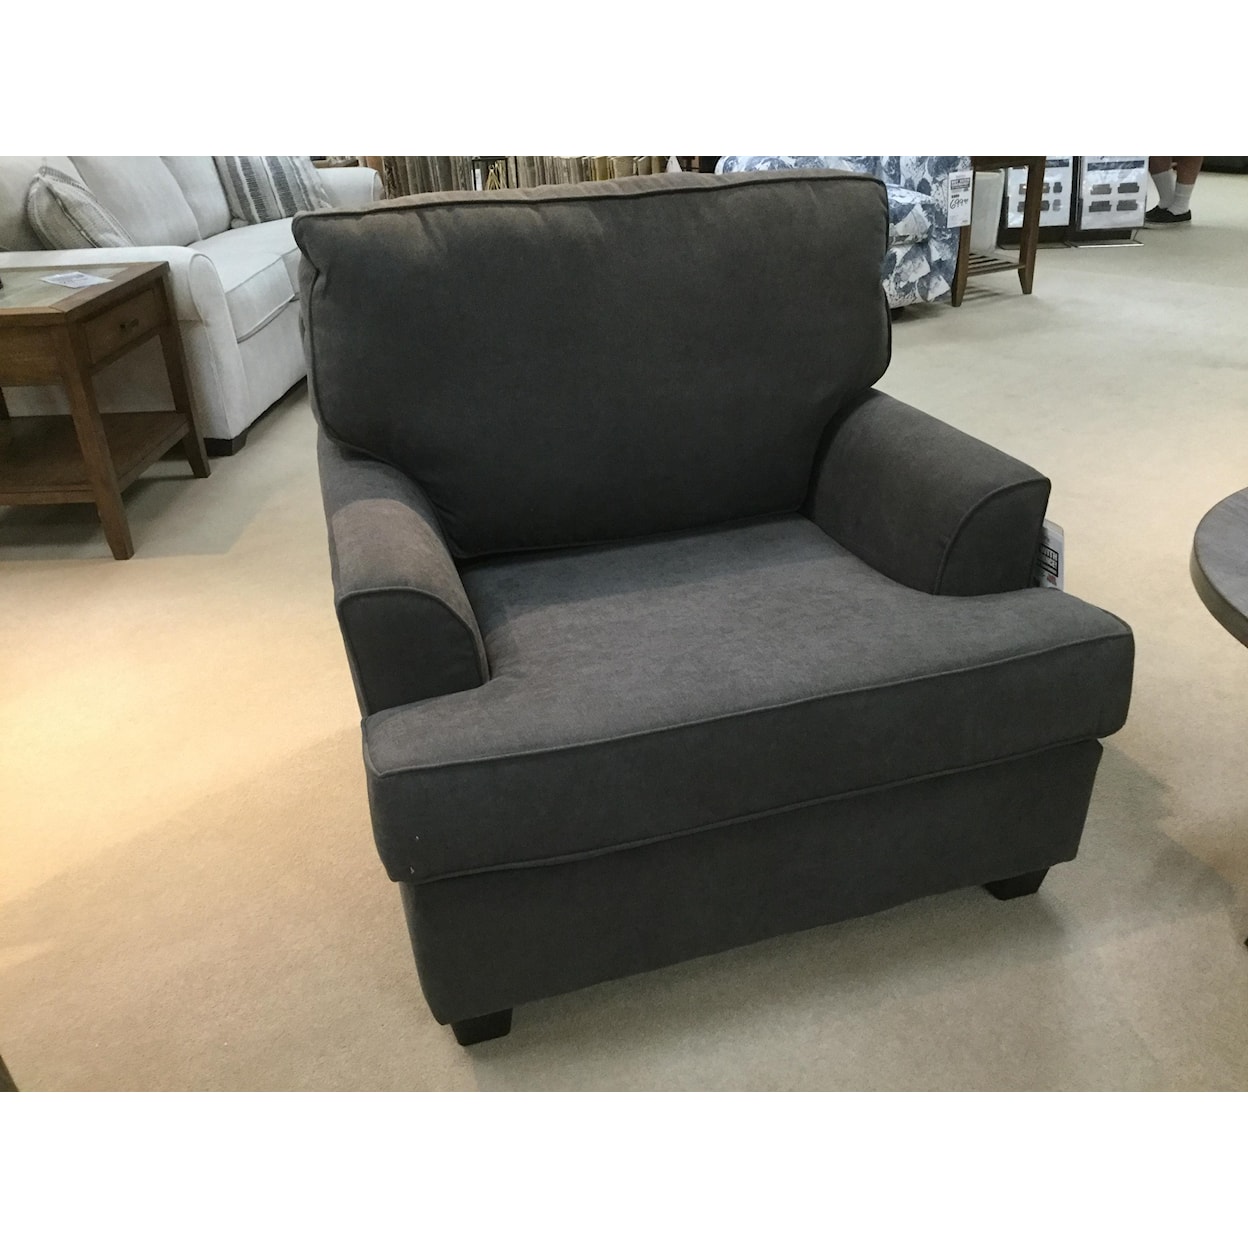 Edgewood Furniture C392 Chair